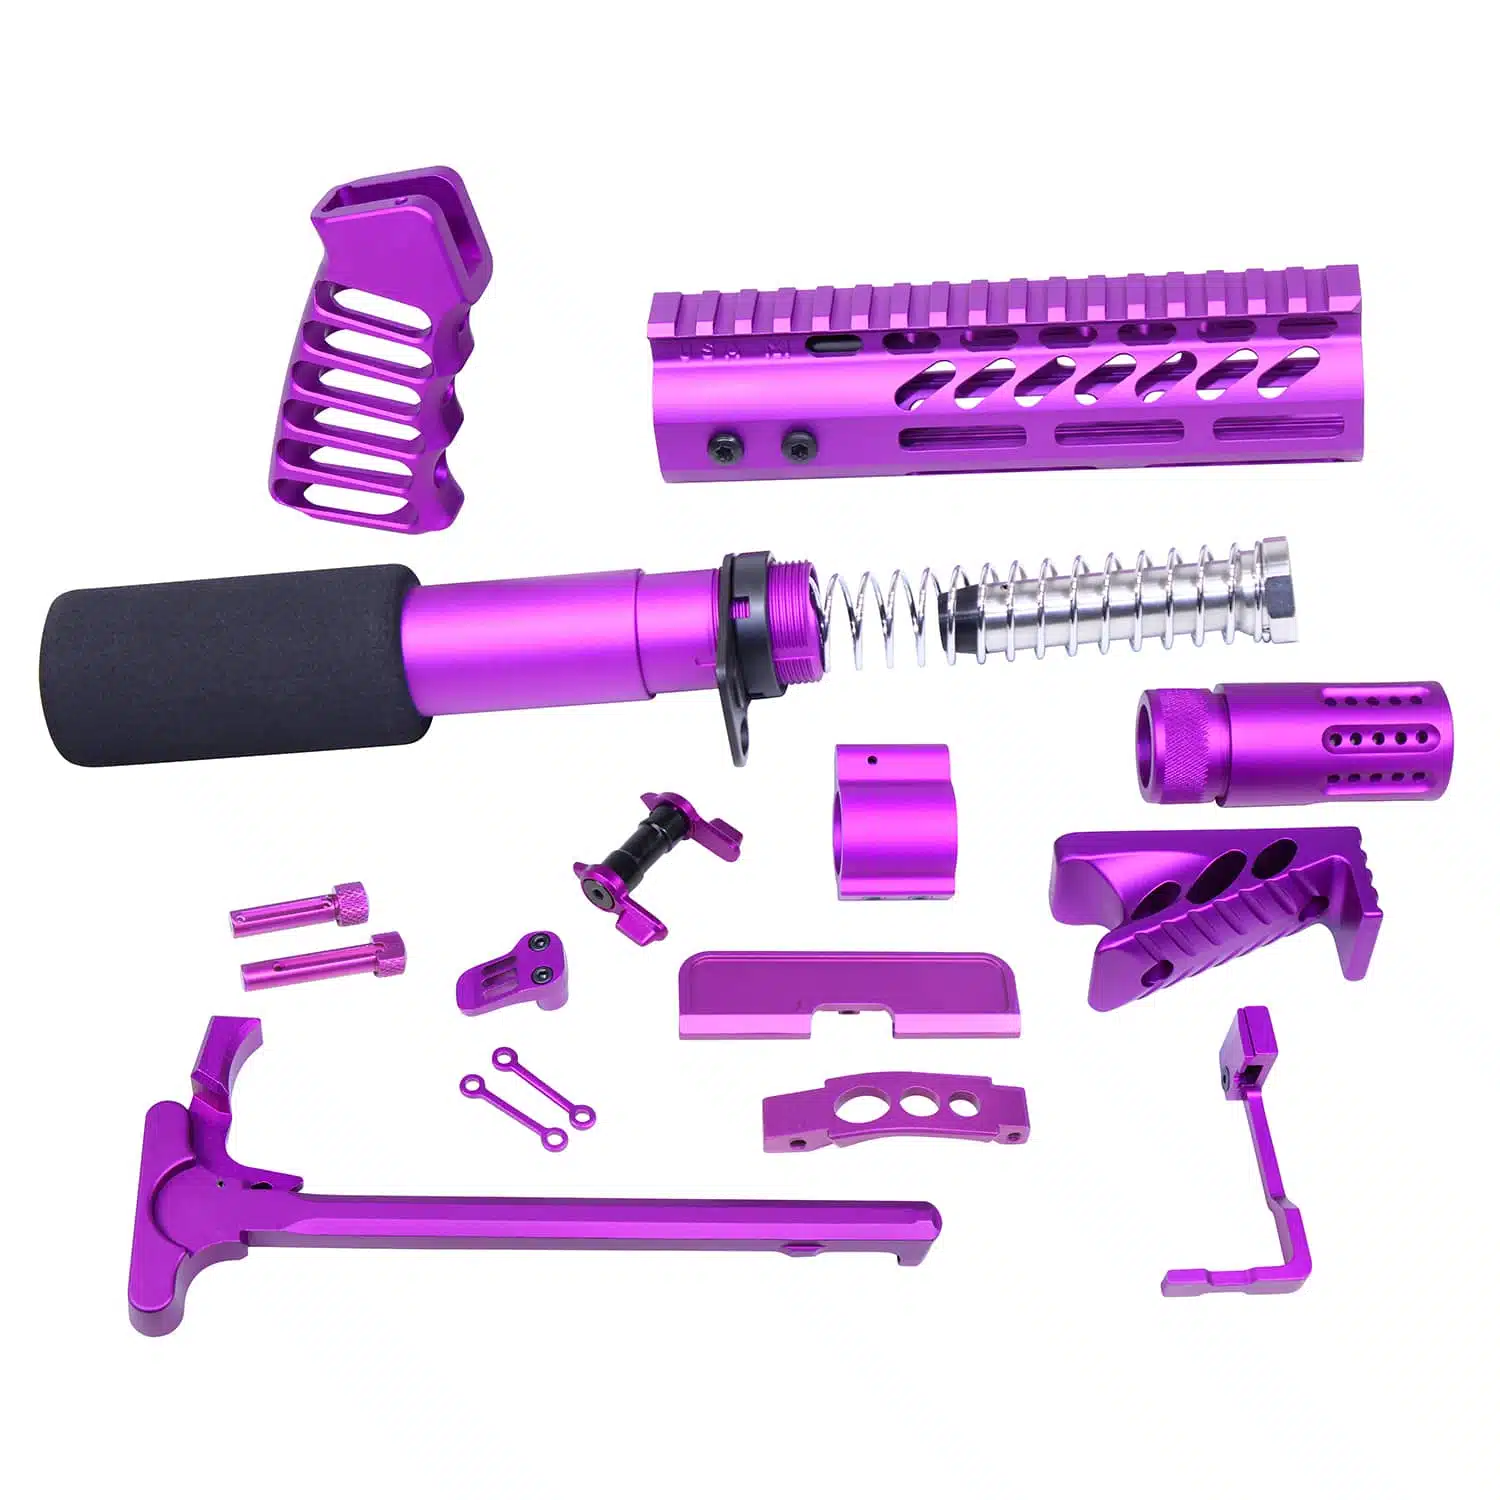 AR-15 Ultimate Pistol Build Kit in Anodized Purple